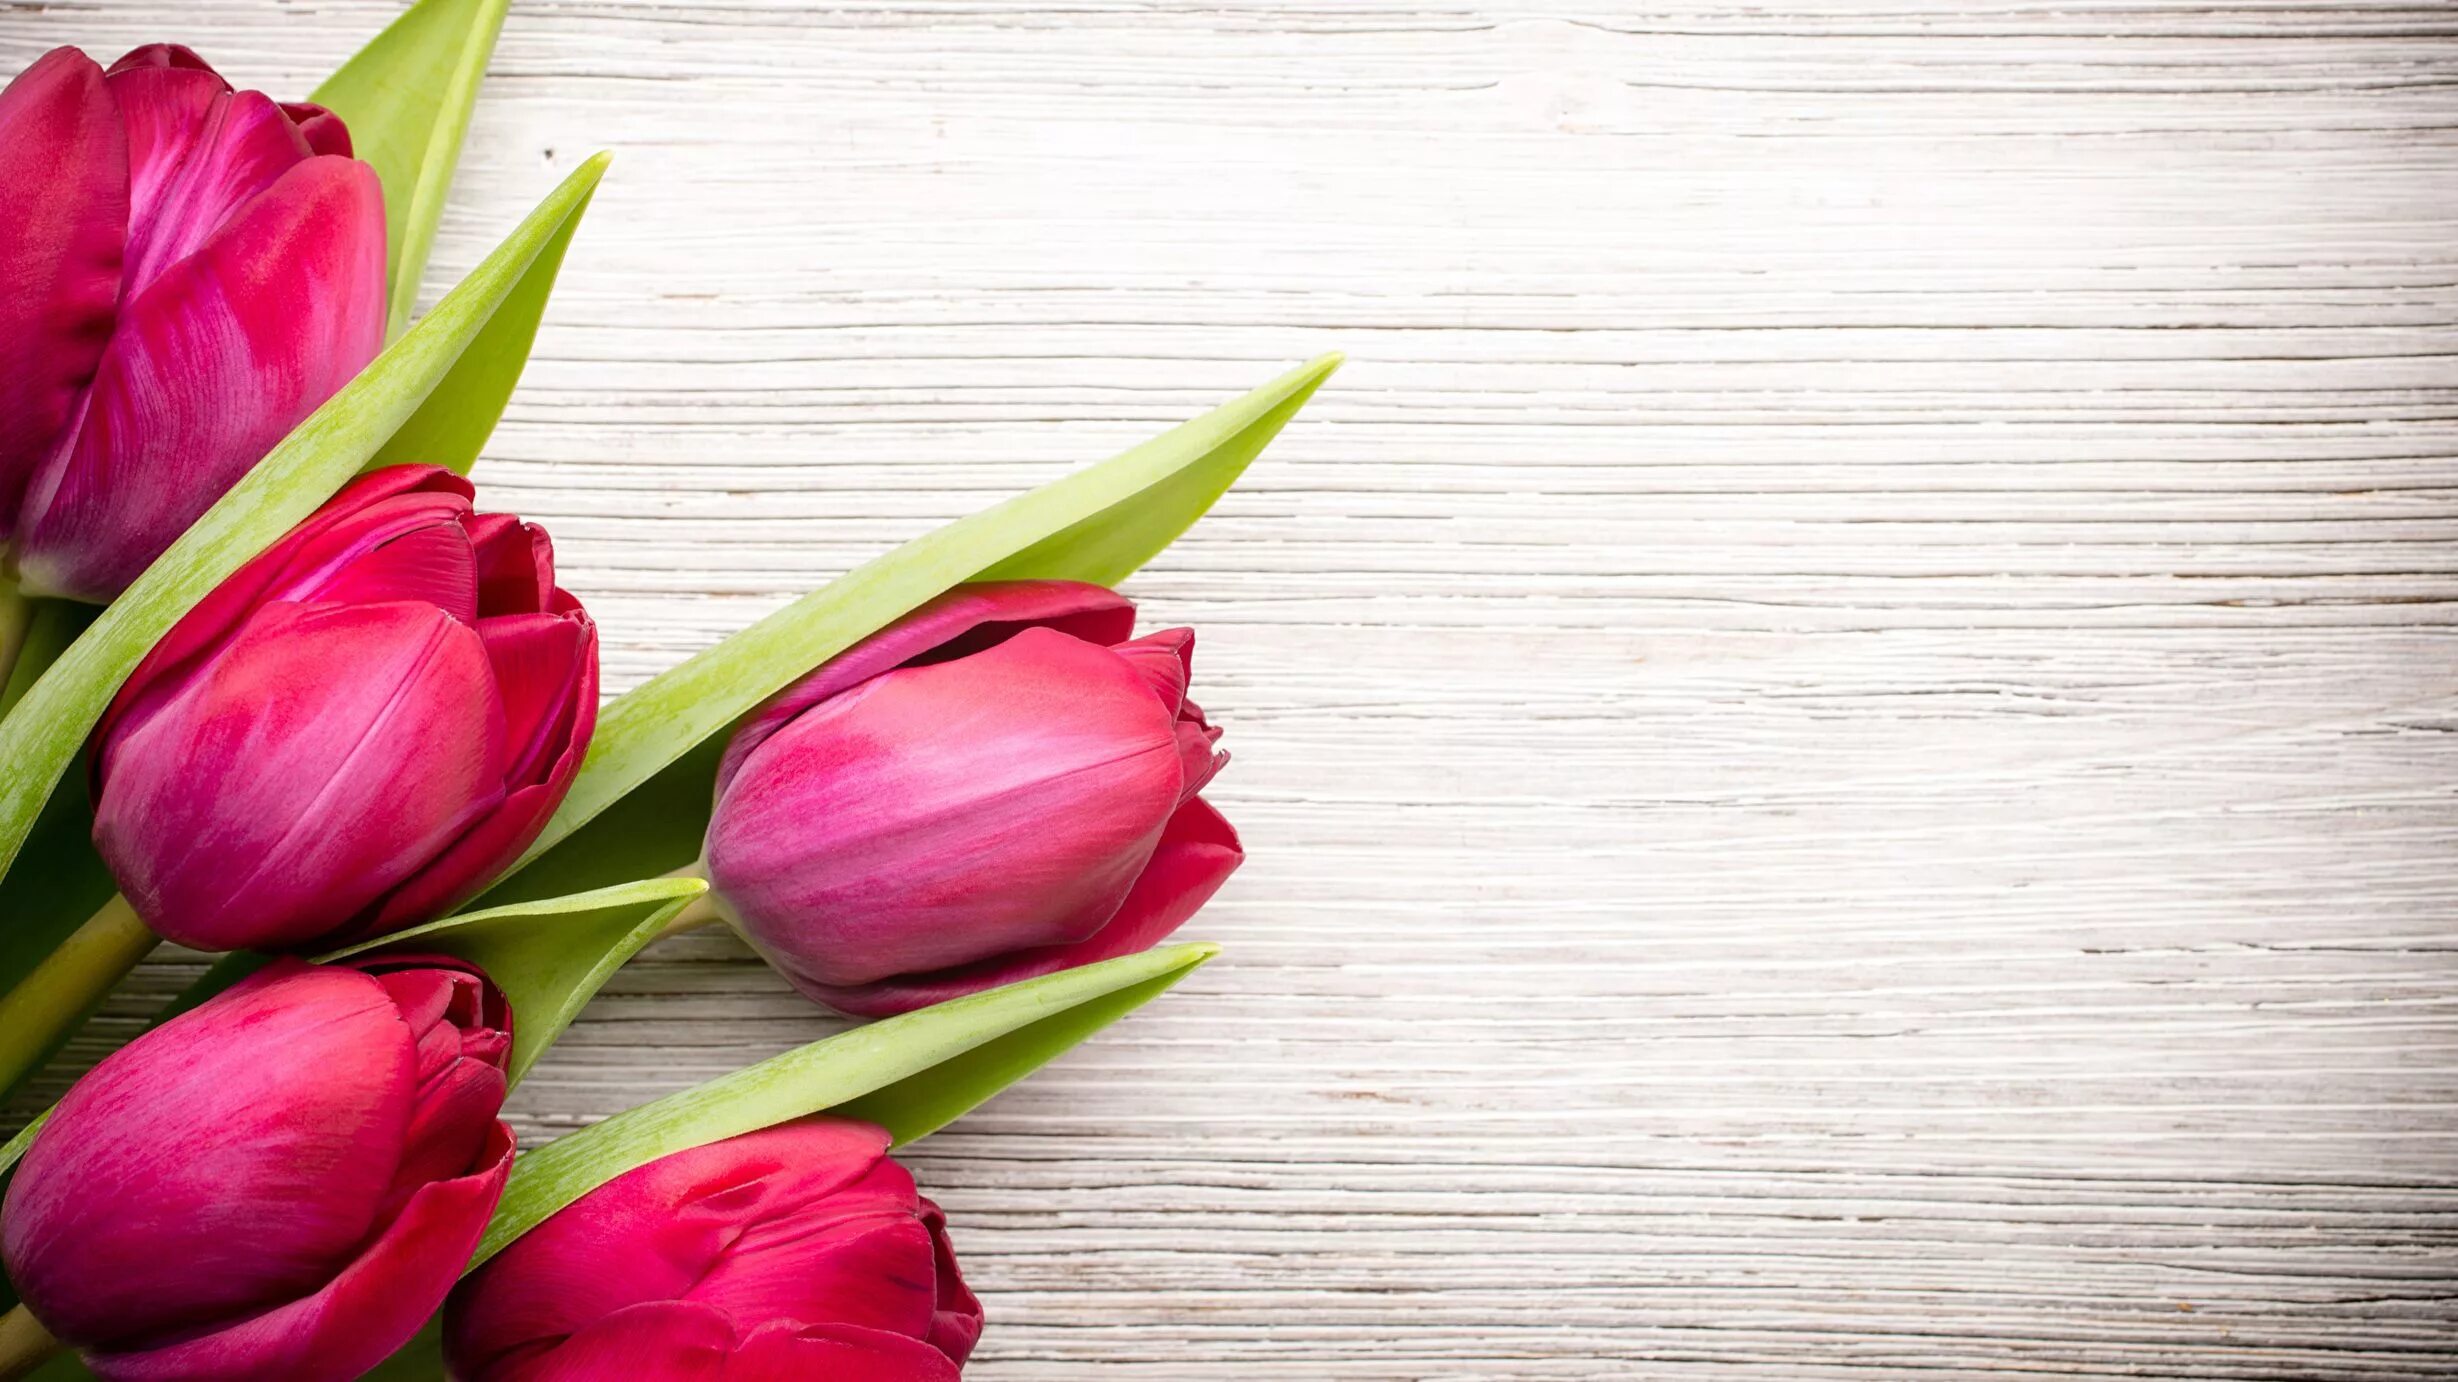 Тюльпаны открытка. Тюльпаны фон. Красивые тюльпаны. Весенние цветы тюльпаны.